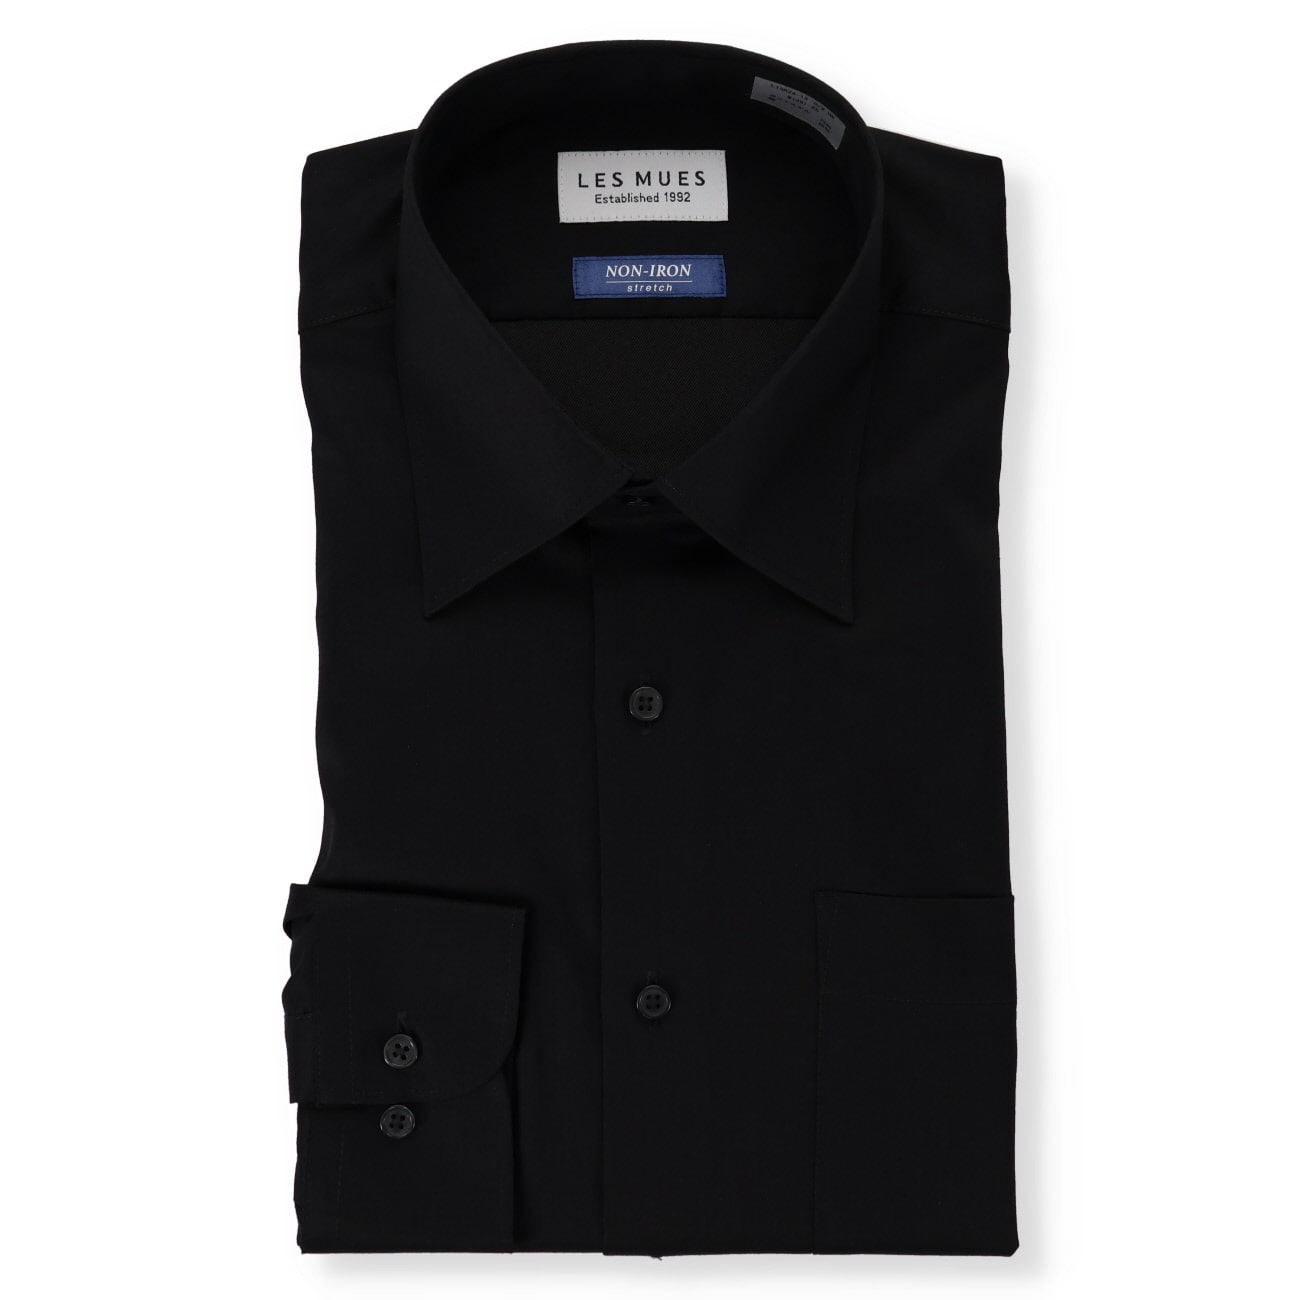 LES MUES Non-iron Stretch Black Regular Collar Shirt - Regular fit